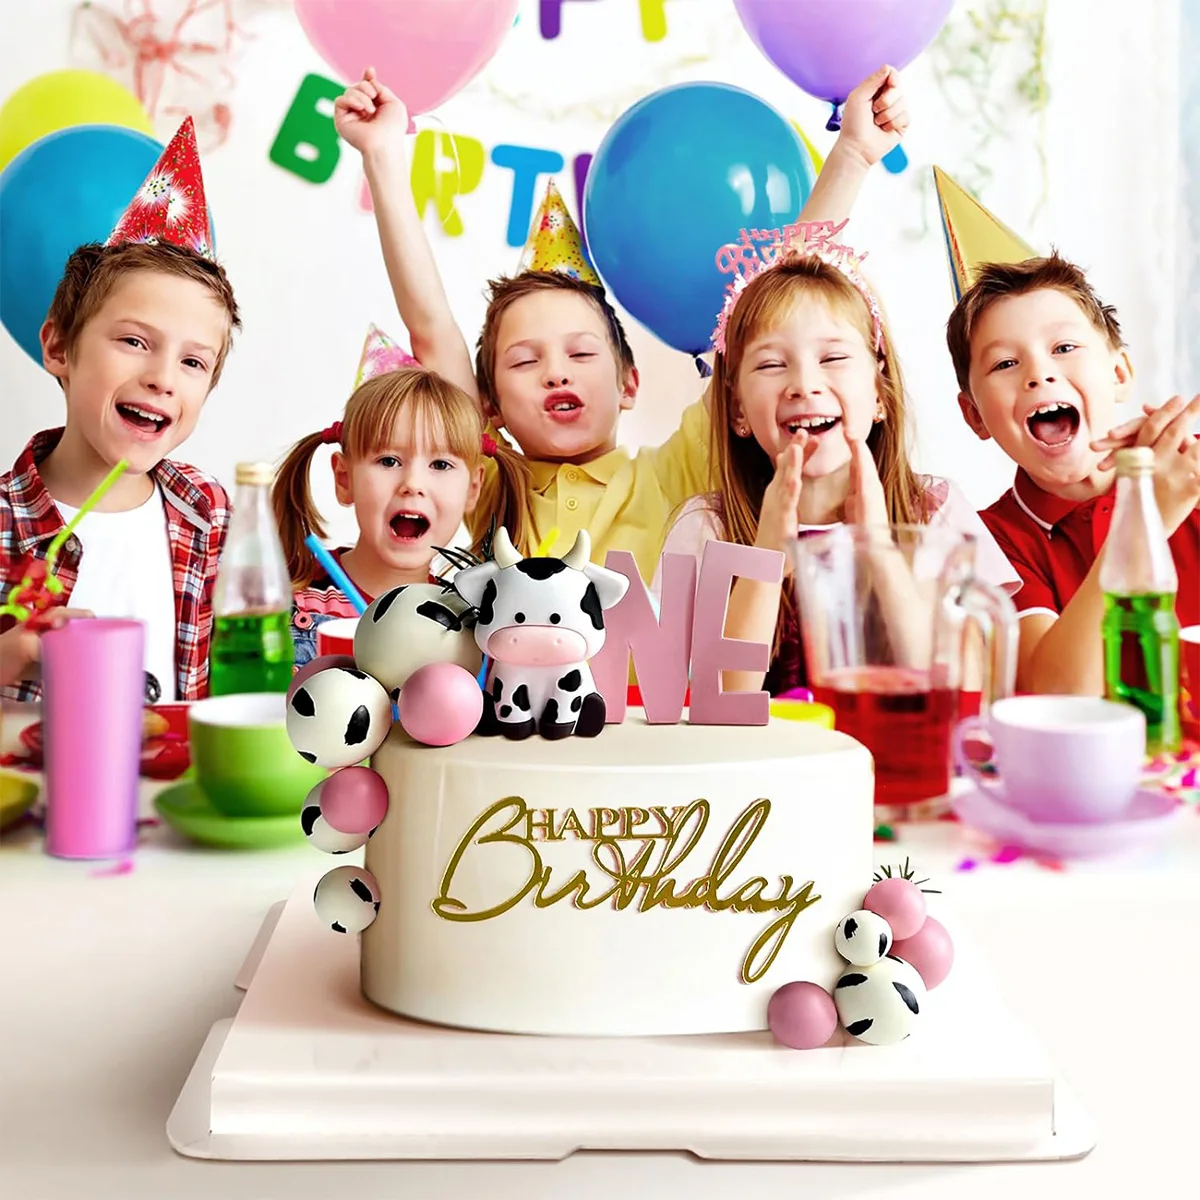 https://ae01.alicdn.com/kf/S5fa4ecc137cf4ceda47b9edd5cc0567d4/13Pcs-Cow-Cake-Toppers-Foam-Balls-Cake-Decorations-with-Gold-Happy-Birthday-Topper-for-Baby-Shower.jpg